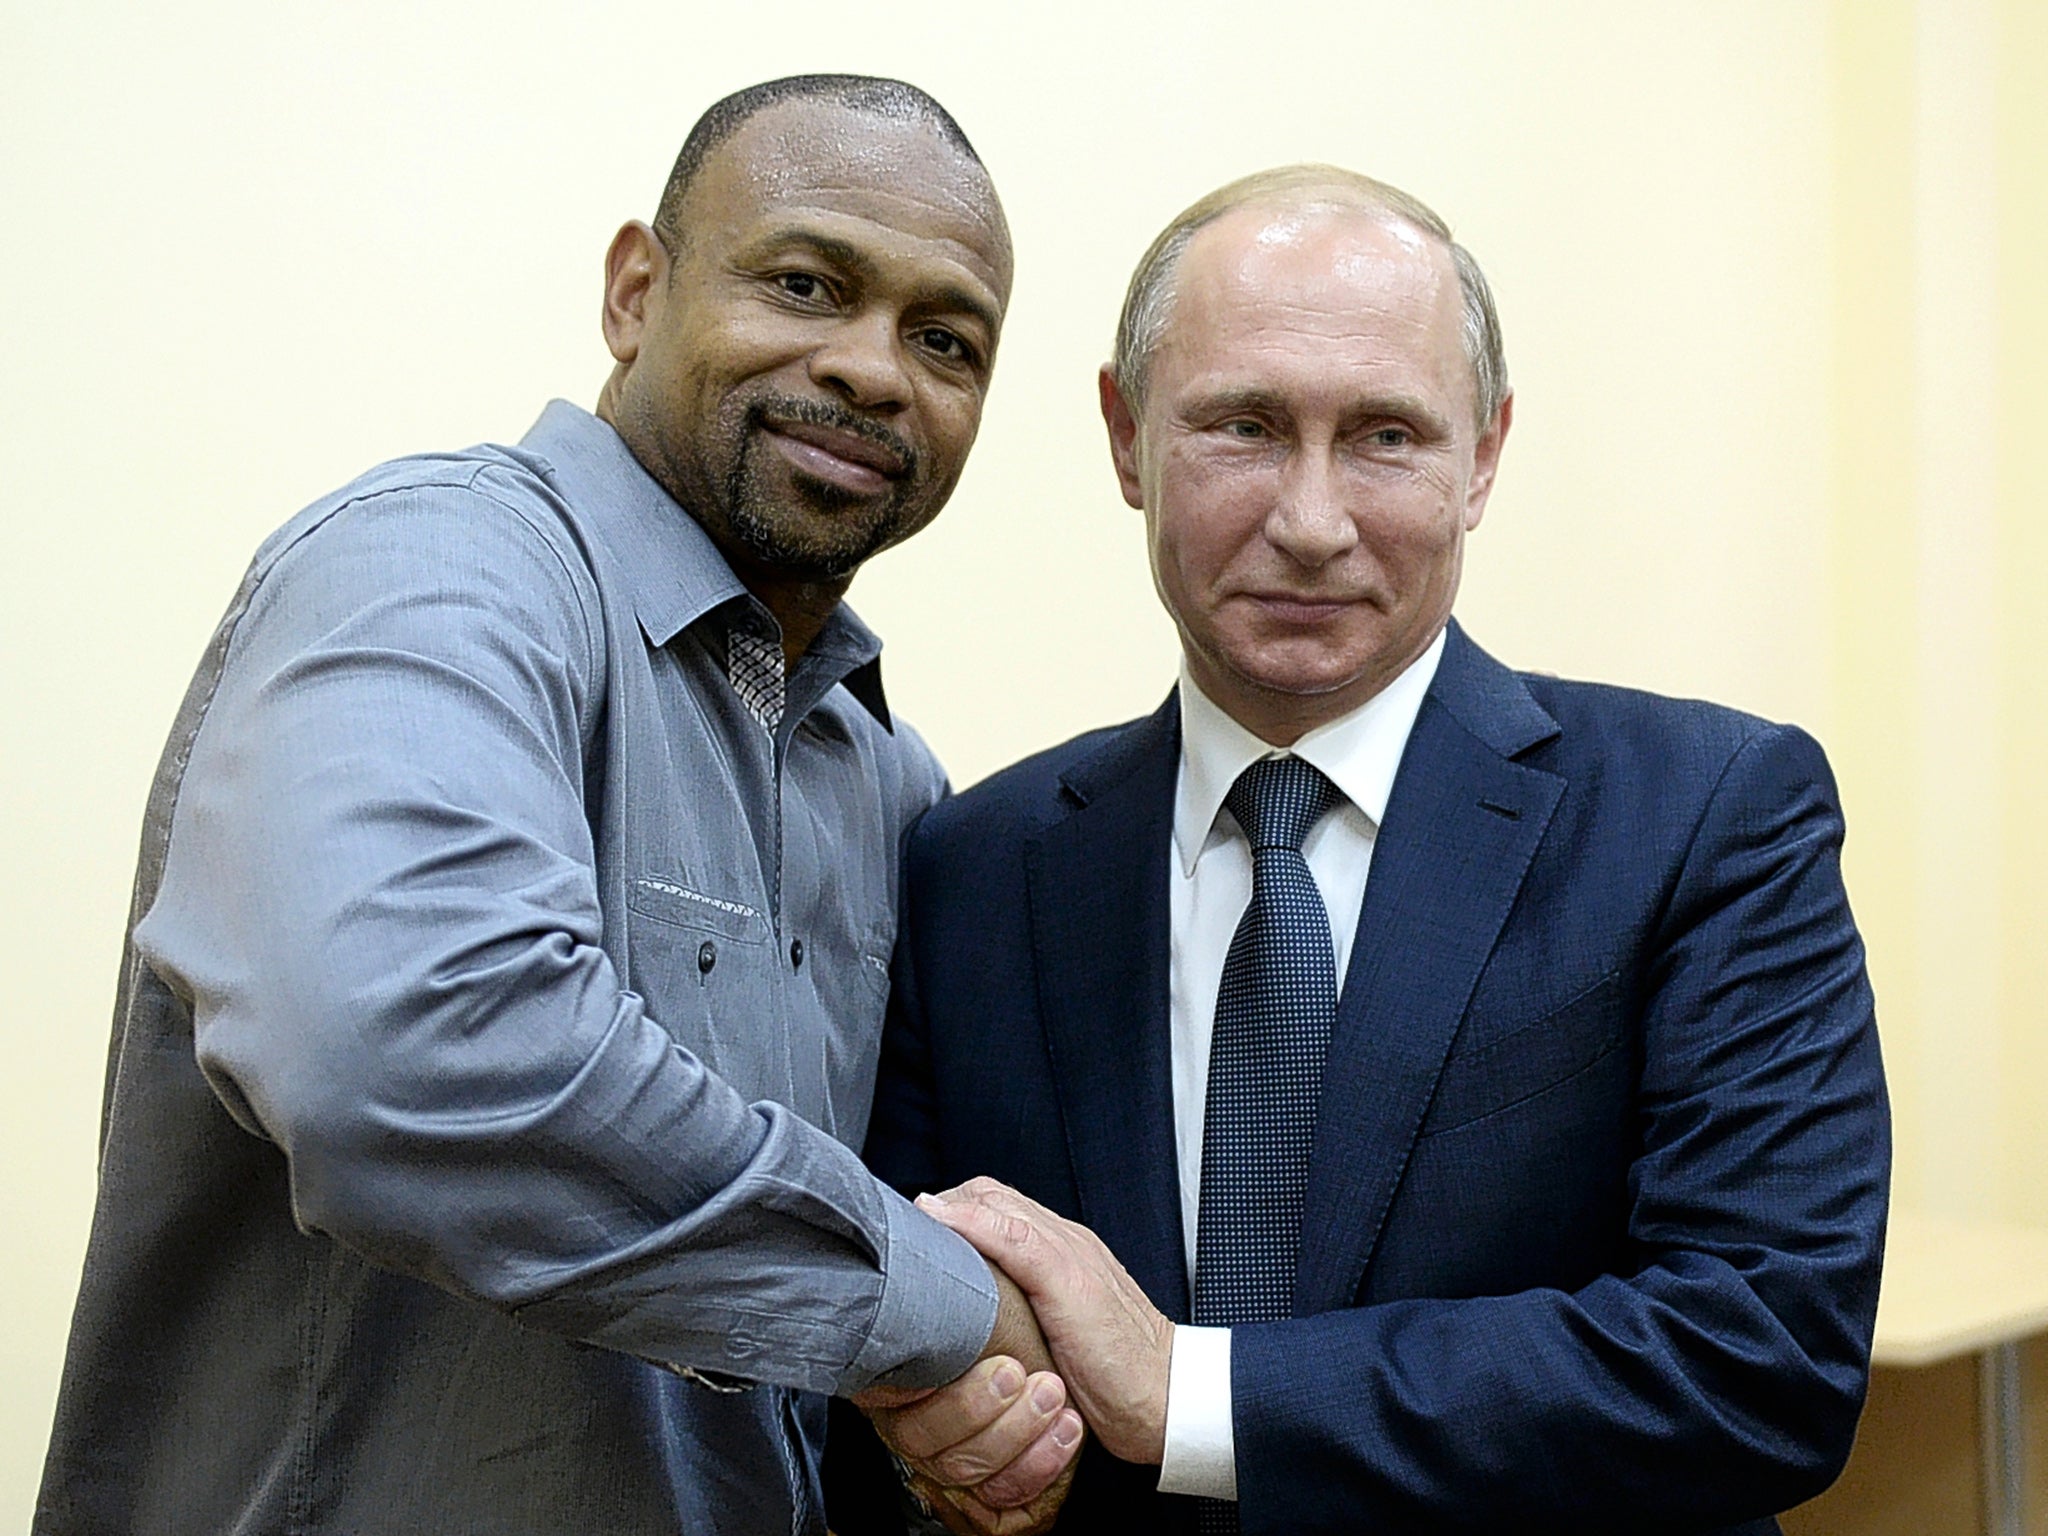 Roy Jones shakes hands with Russia’s President Vladimir Putin in August